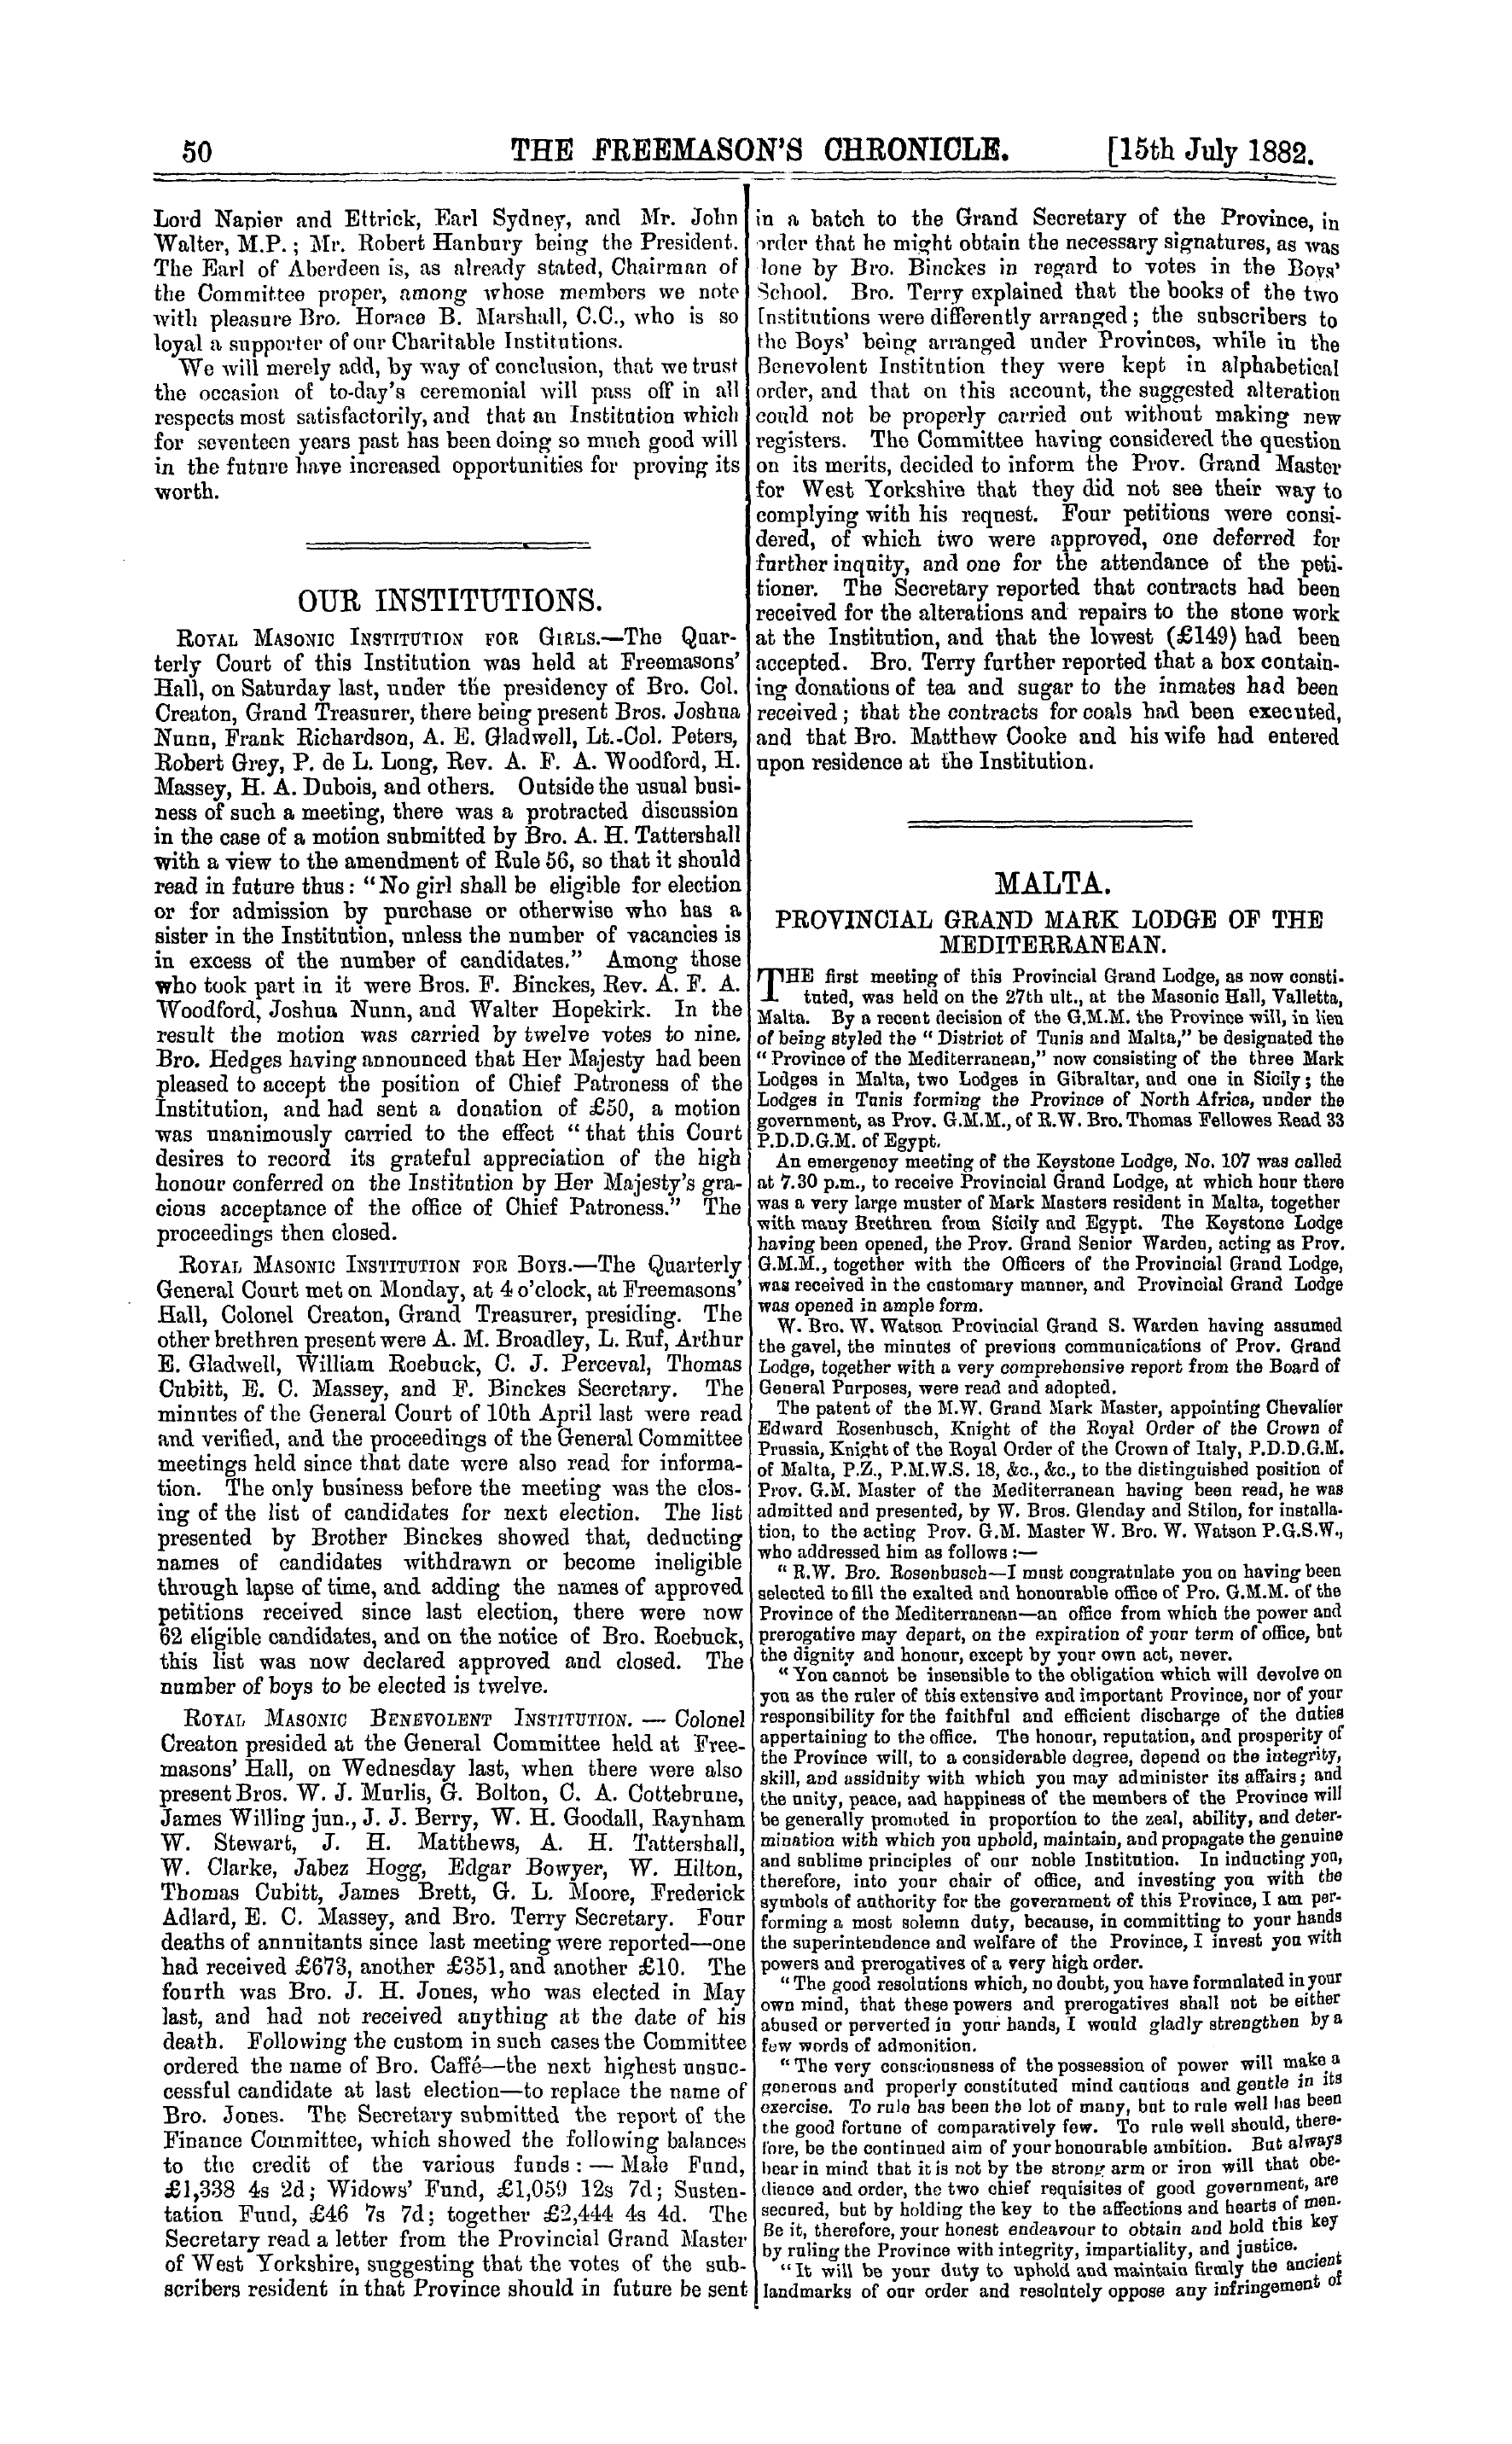 The Freemason's Chronicle: 1882-07-15 - Homes For Little Boys.